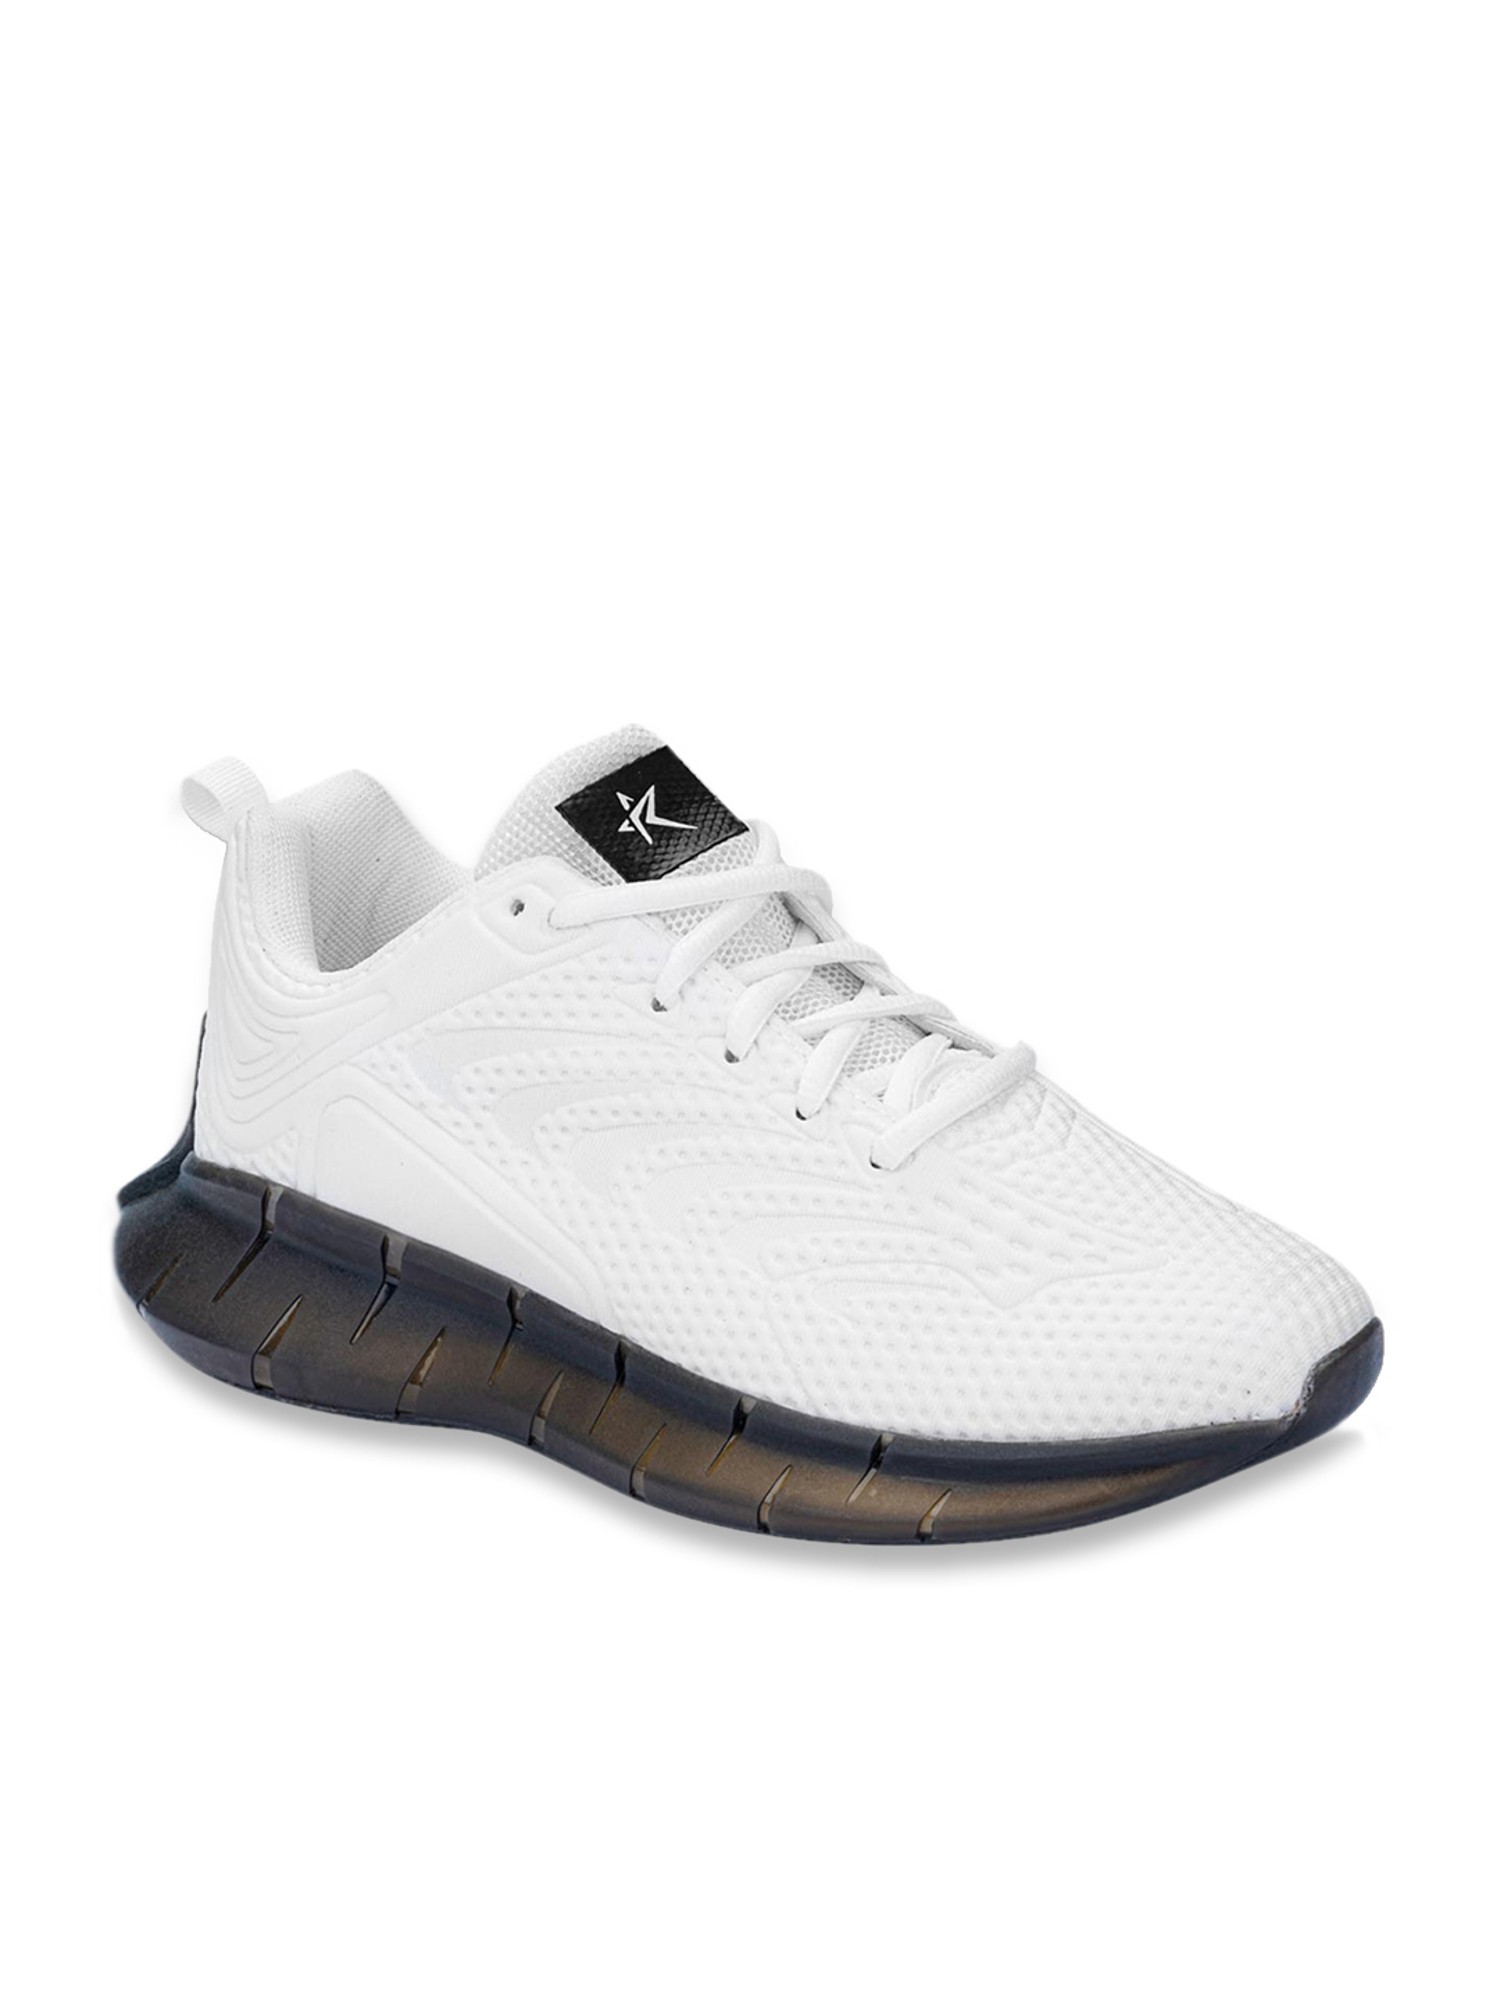 Buy REFOAM Men Grey Mesh Running Sports Shoes Online @ ₹999 from ShopClues